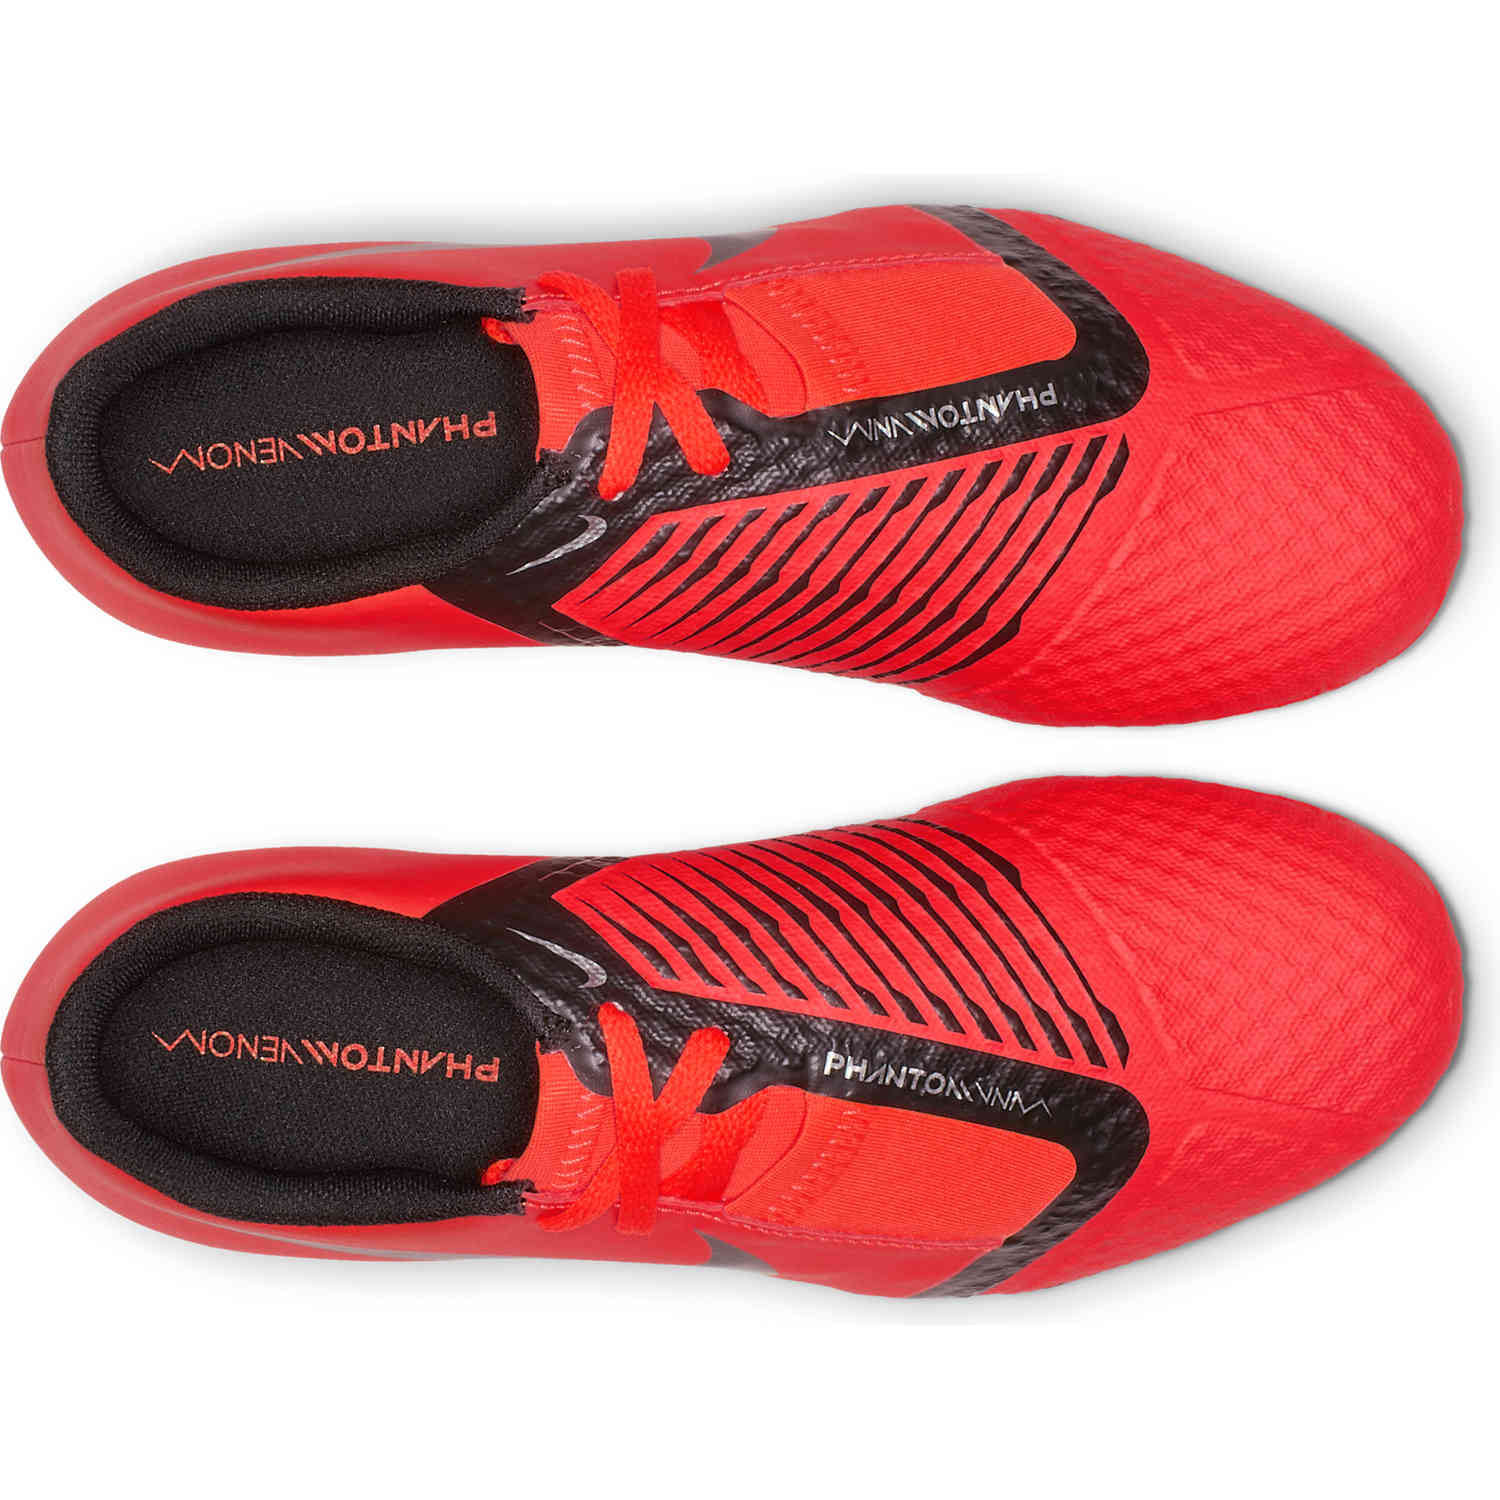 News 2015 Nike Hypervenom Phantom II FG Football Cleats